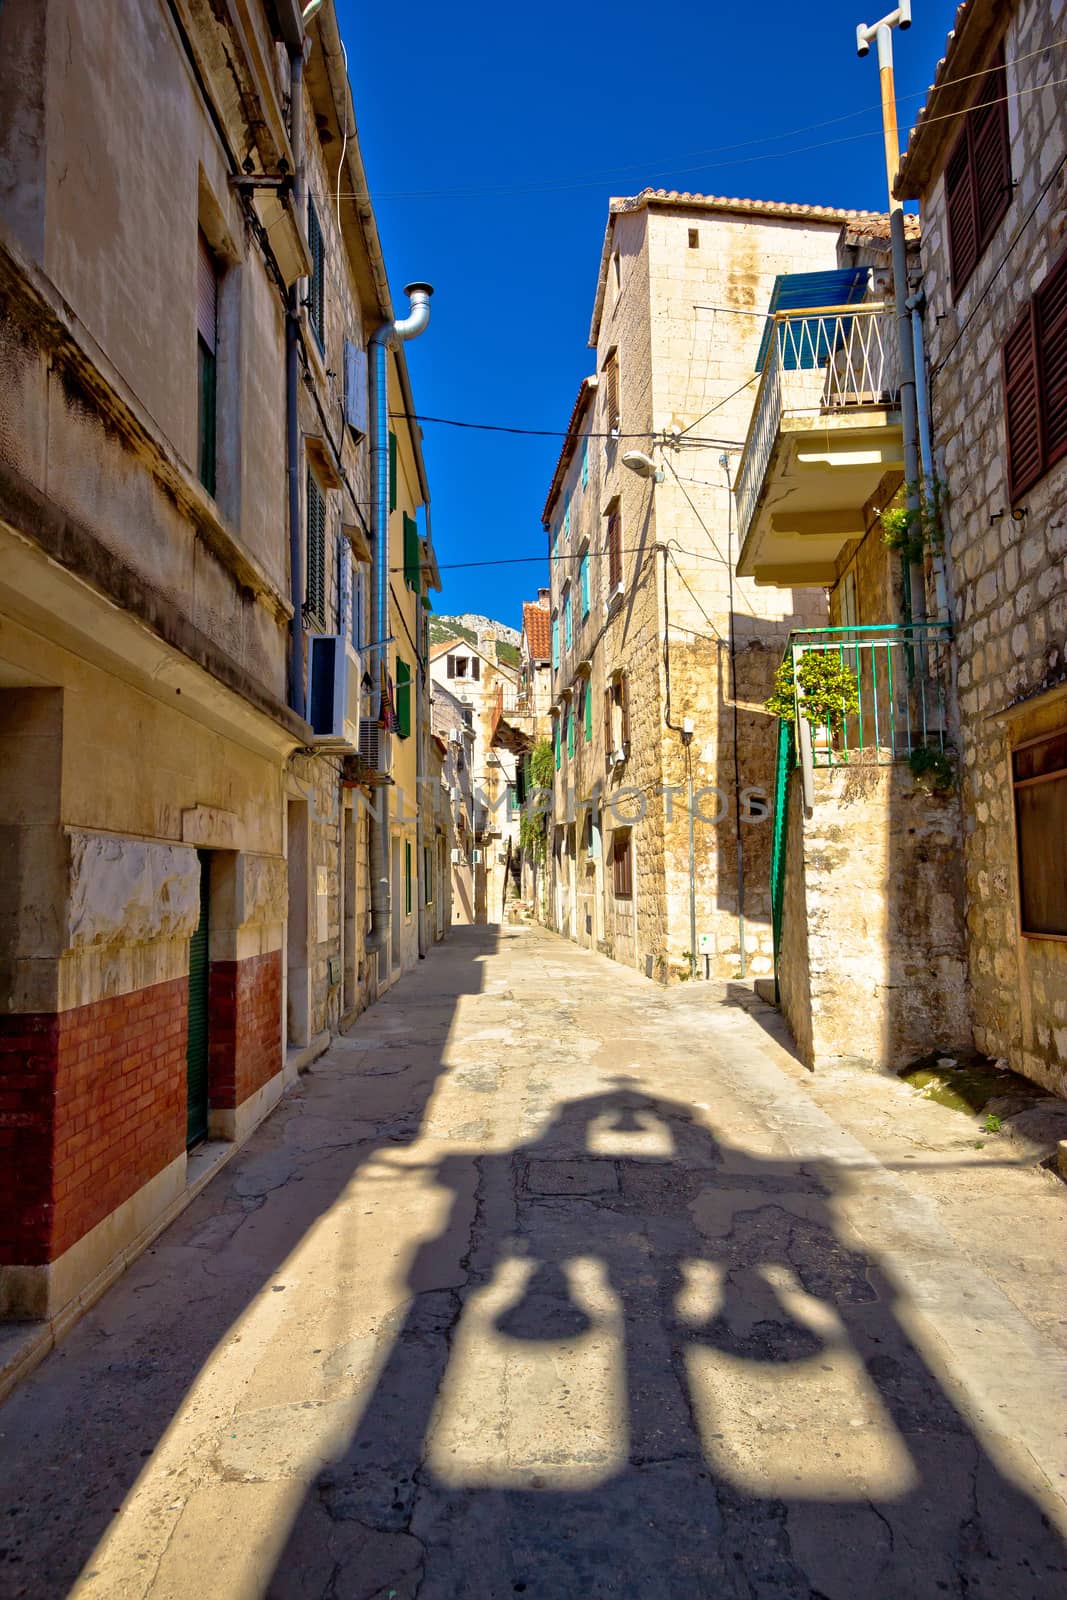 Old narrow stone street of Vis by xbrchx